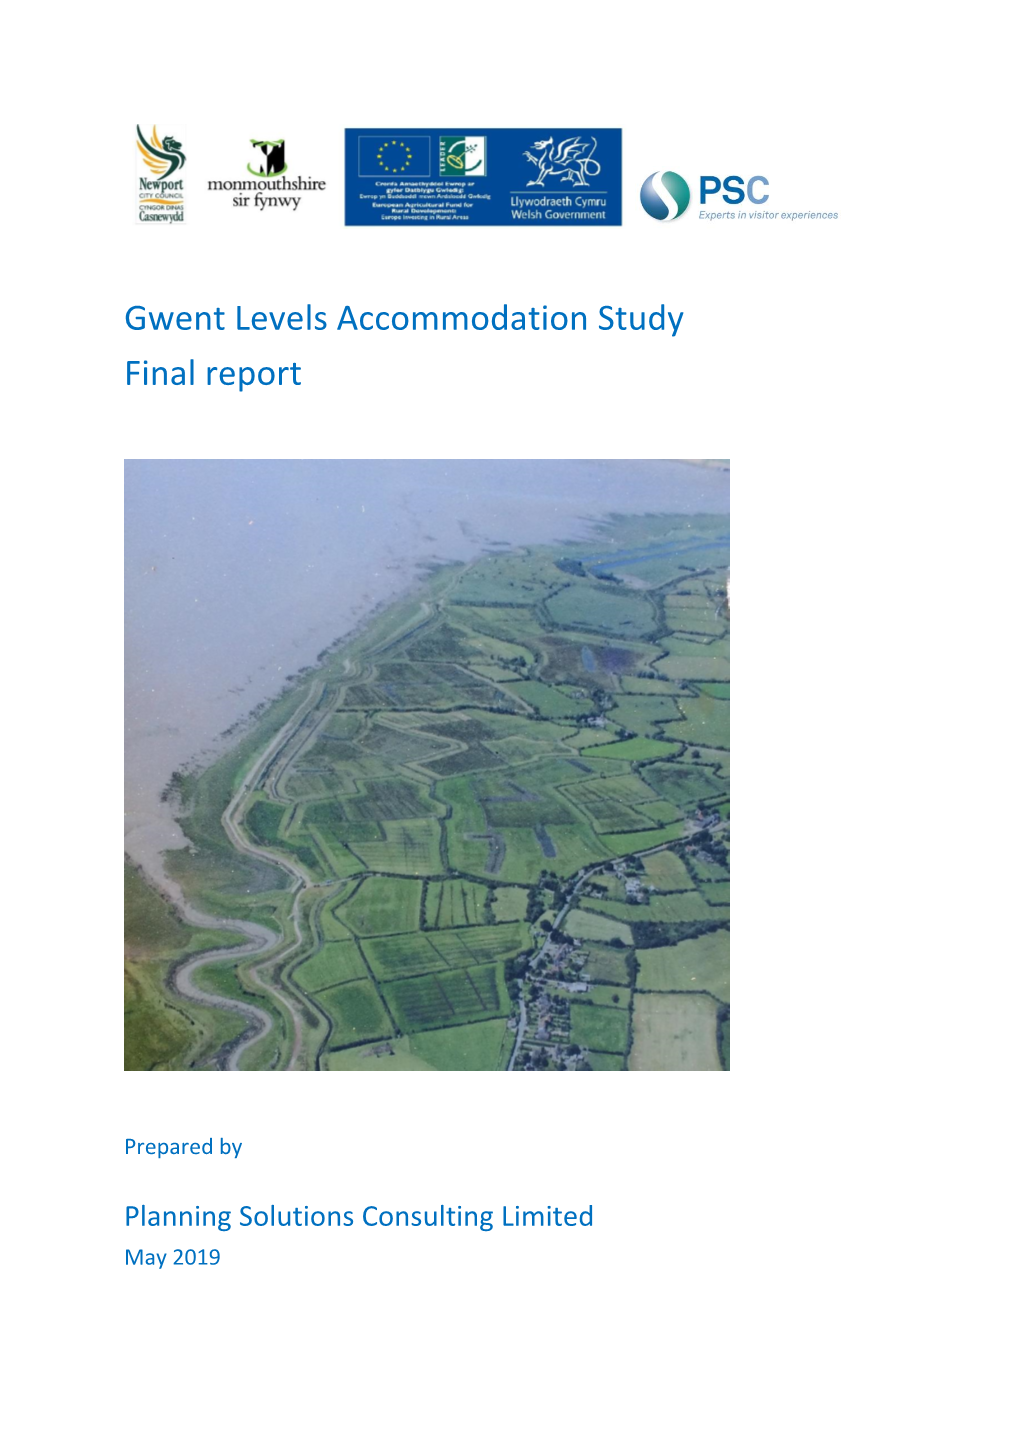 Gwent Levels Accommodation Study Final Report